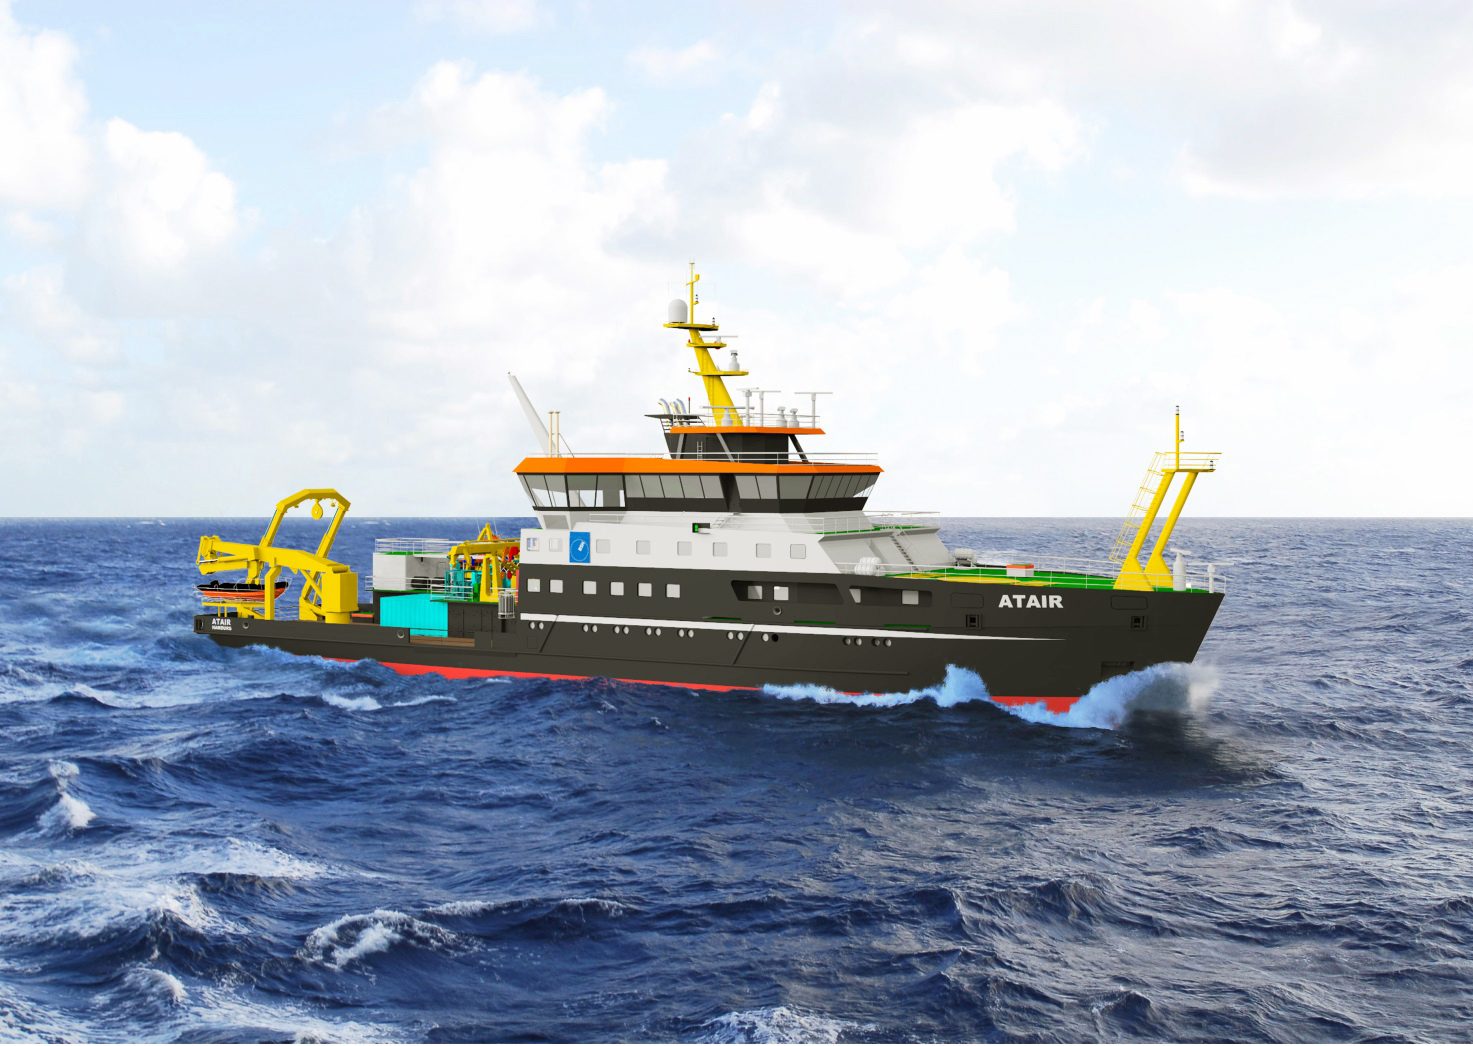 New German LNG fuelled research ship will feature Wärtsilä technology